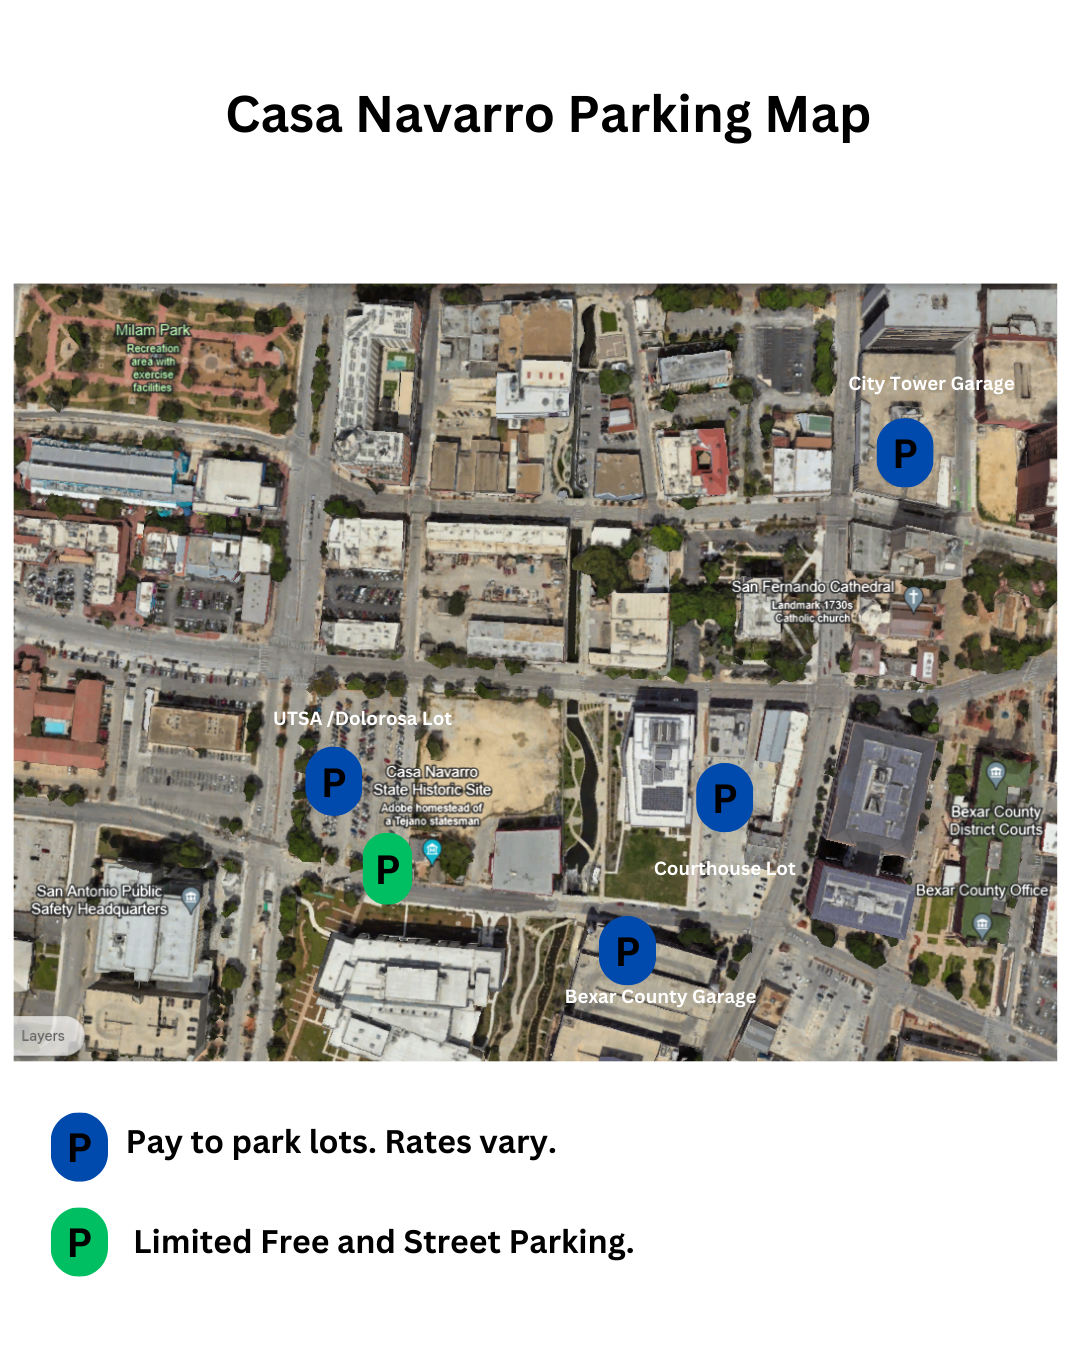 Map of parking areas for downtown San Antonio around Casa Navarro State Historic Site